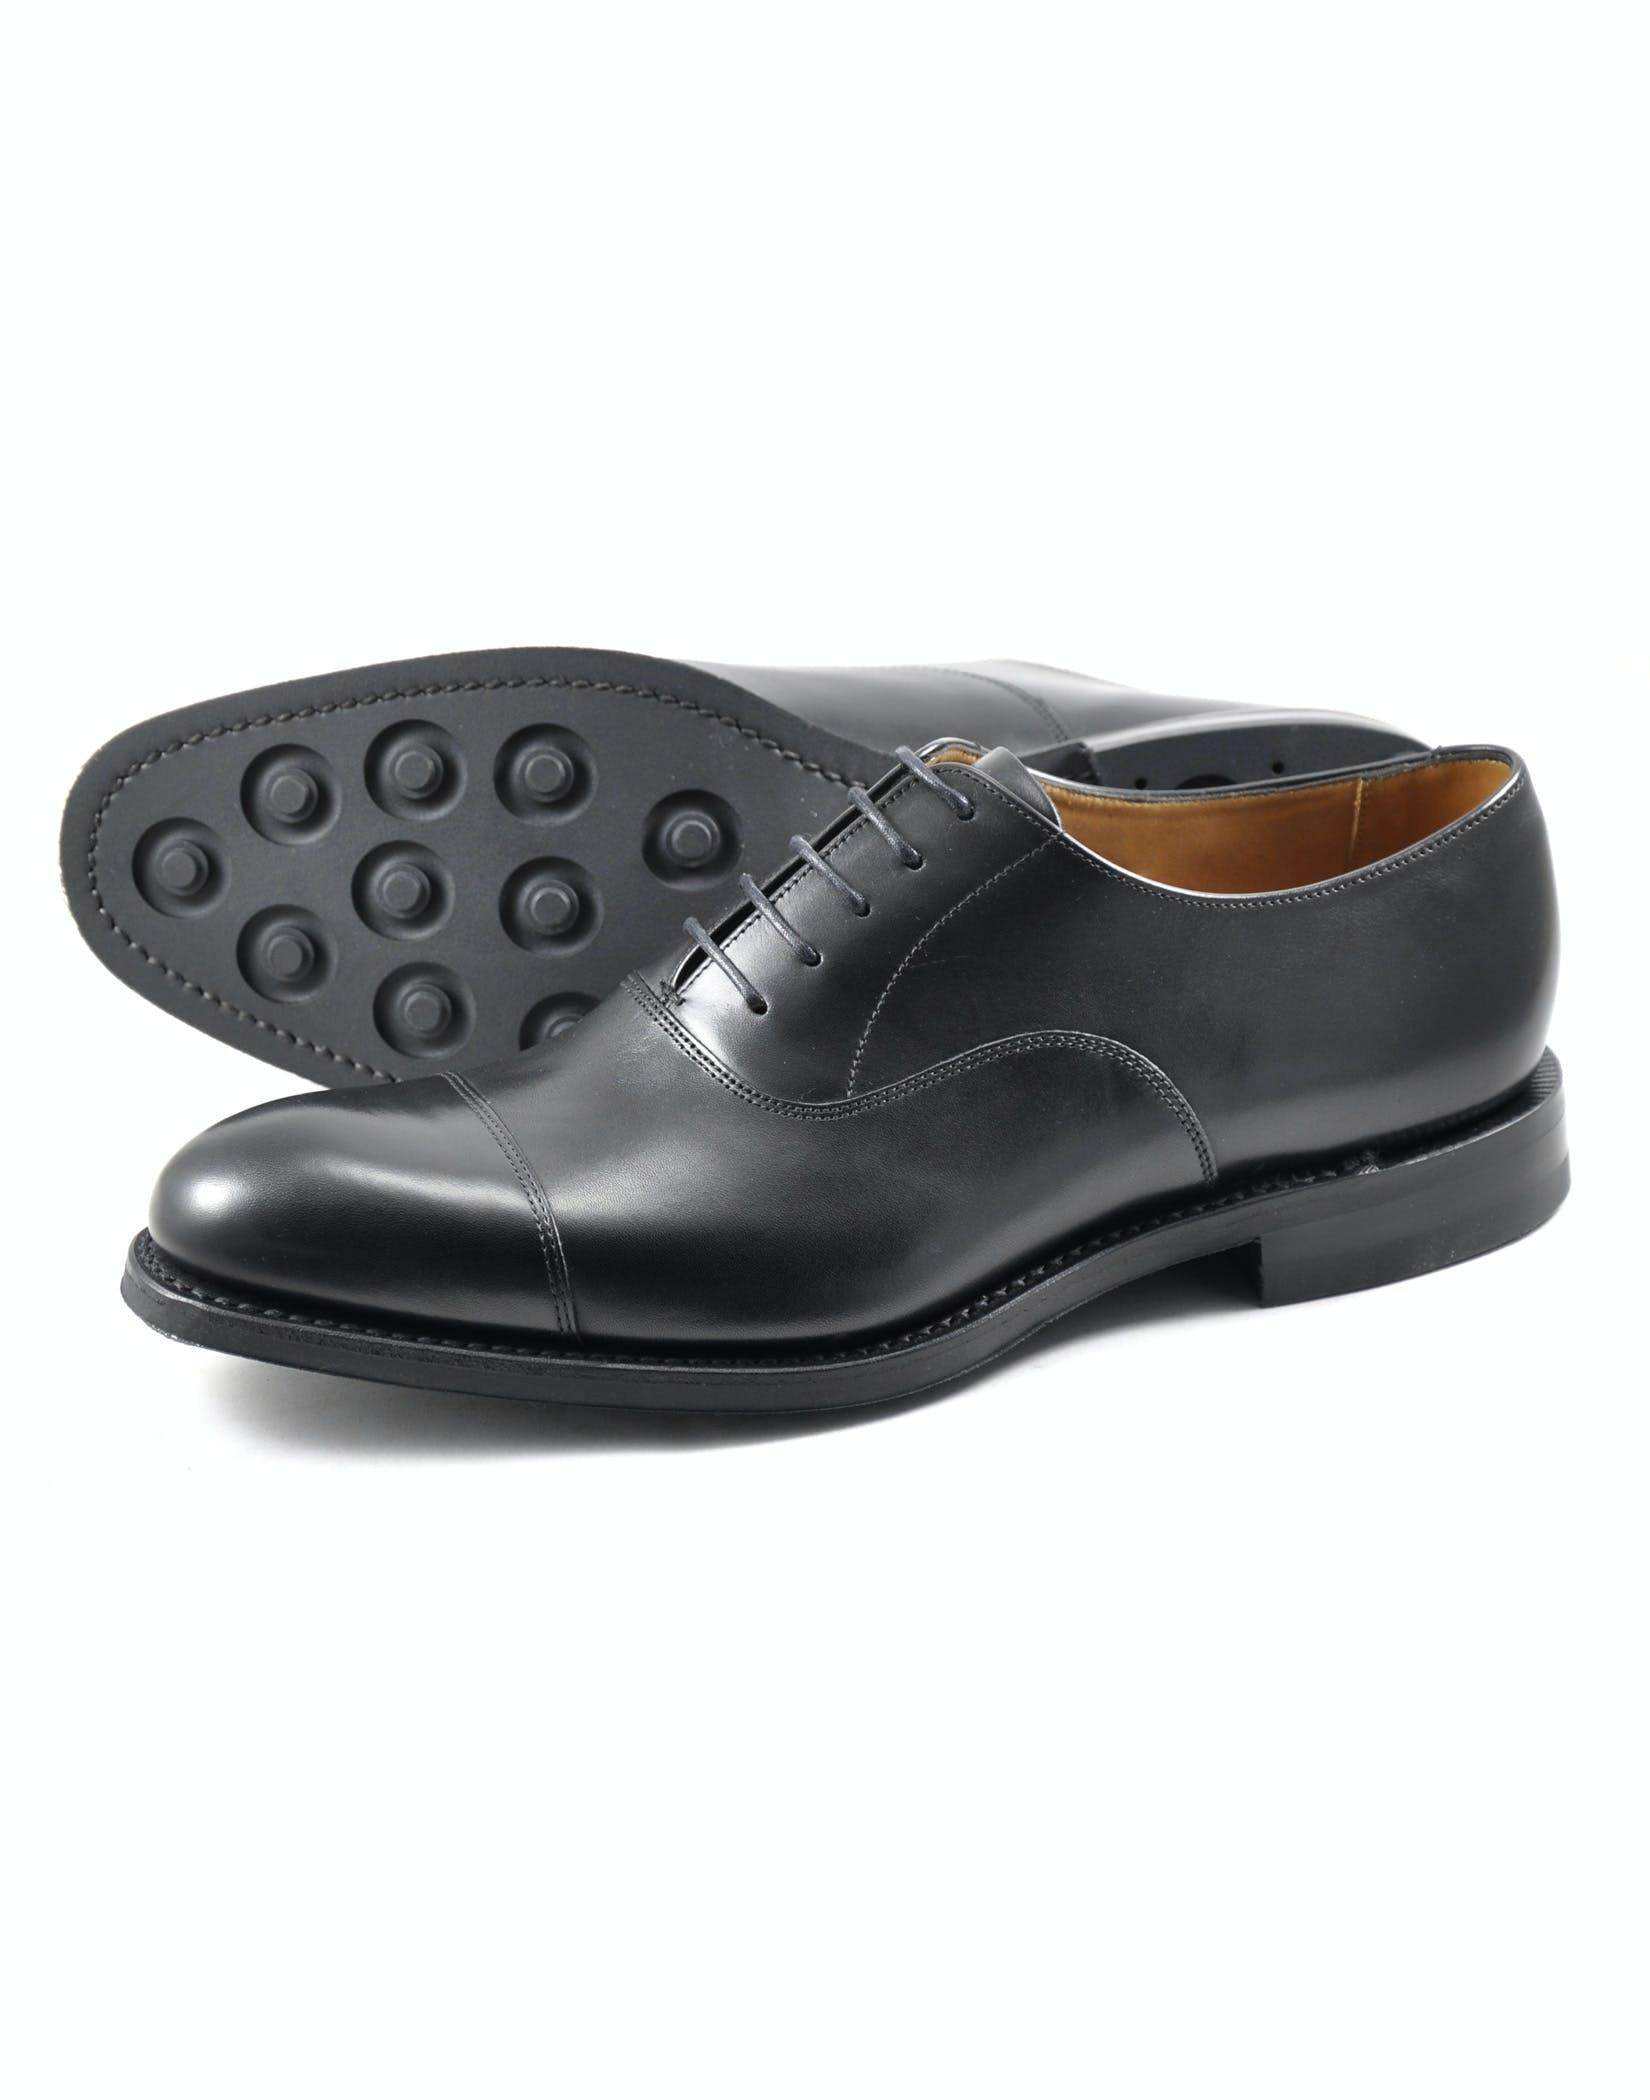 Archway Oxford Shoe - Black